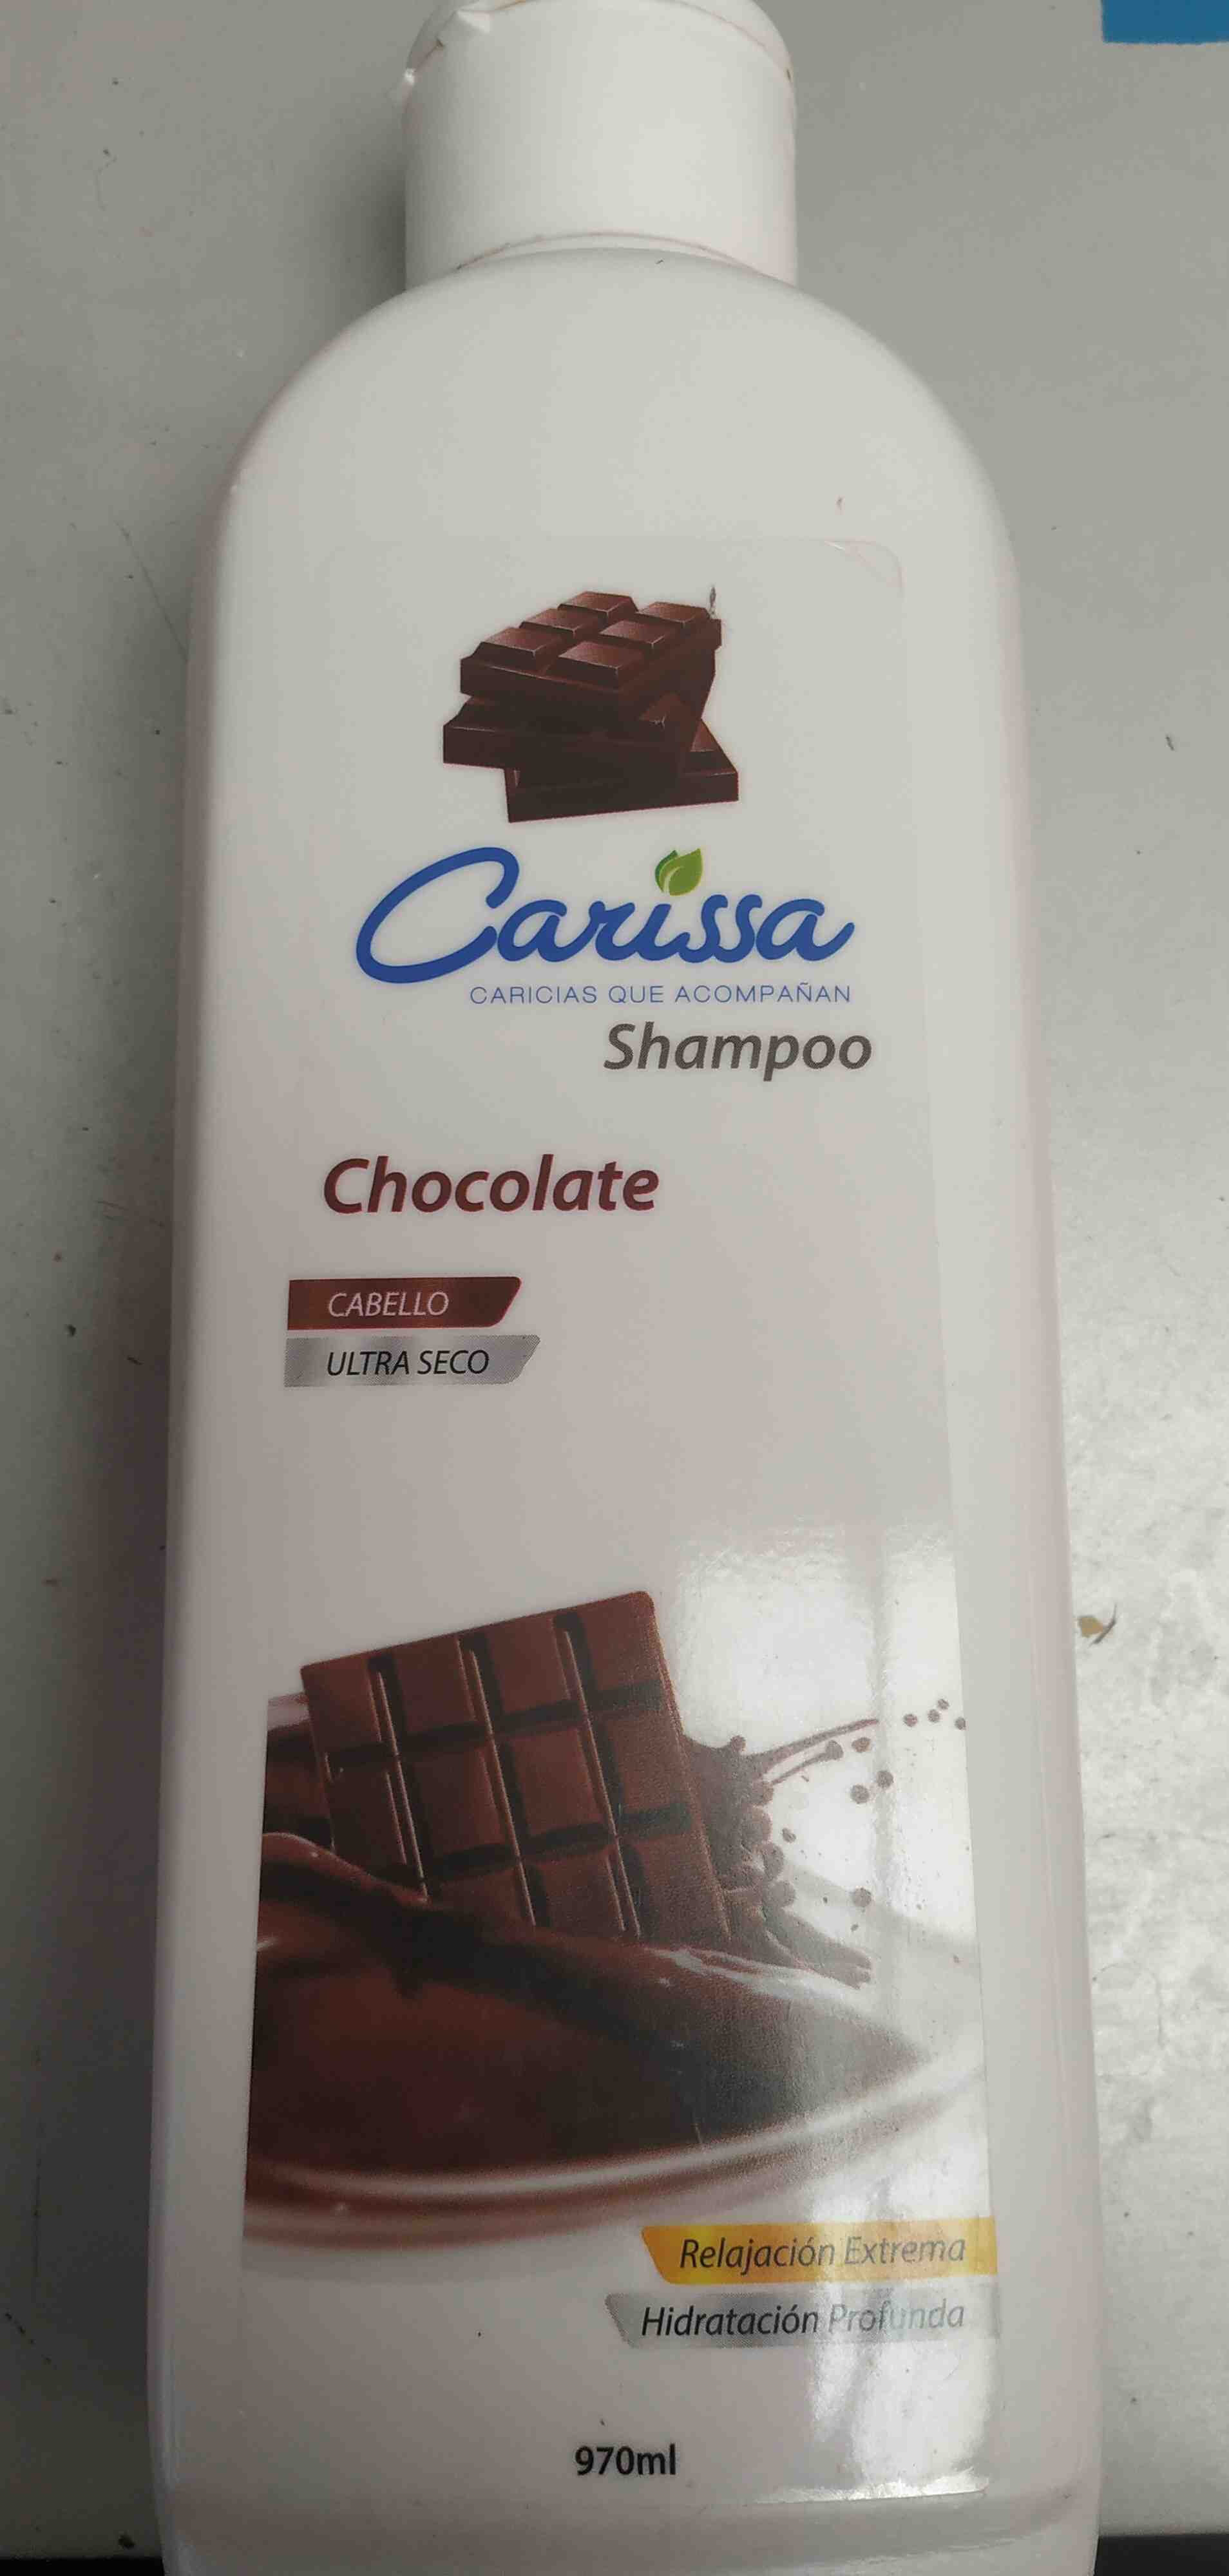 Clarissa shampoo - Product - en